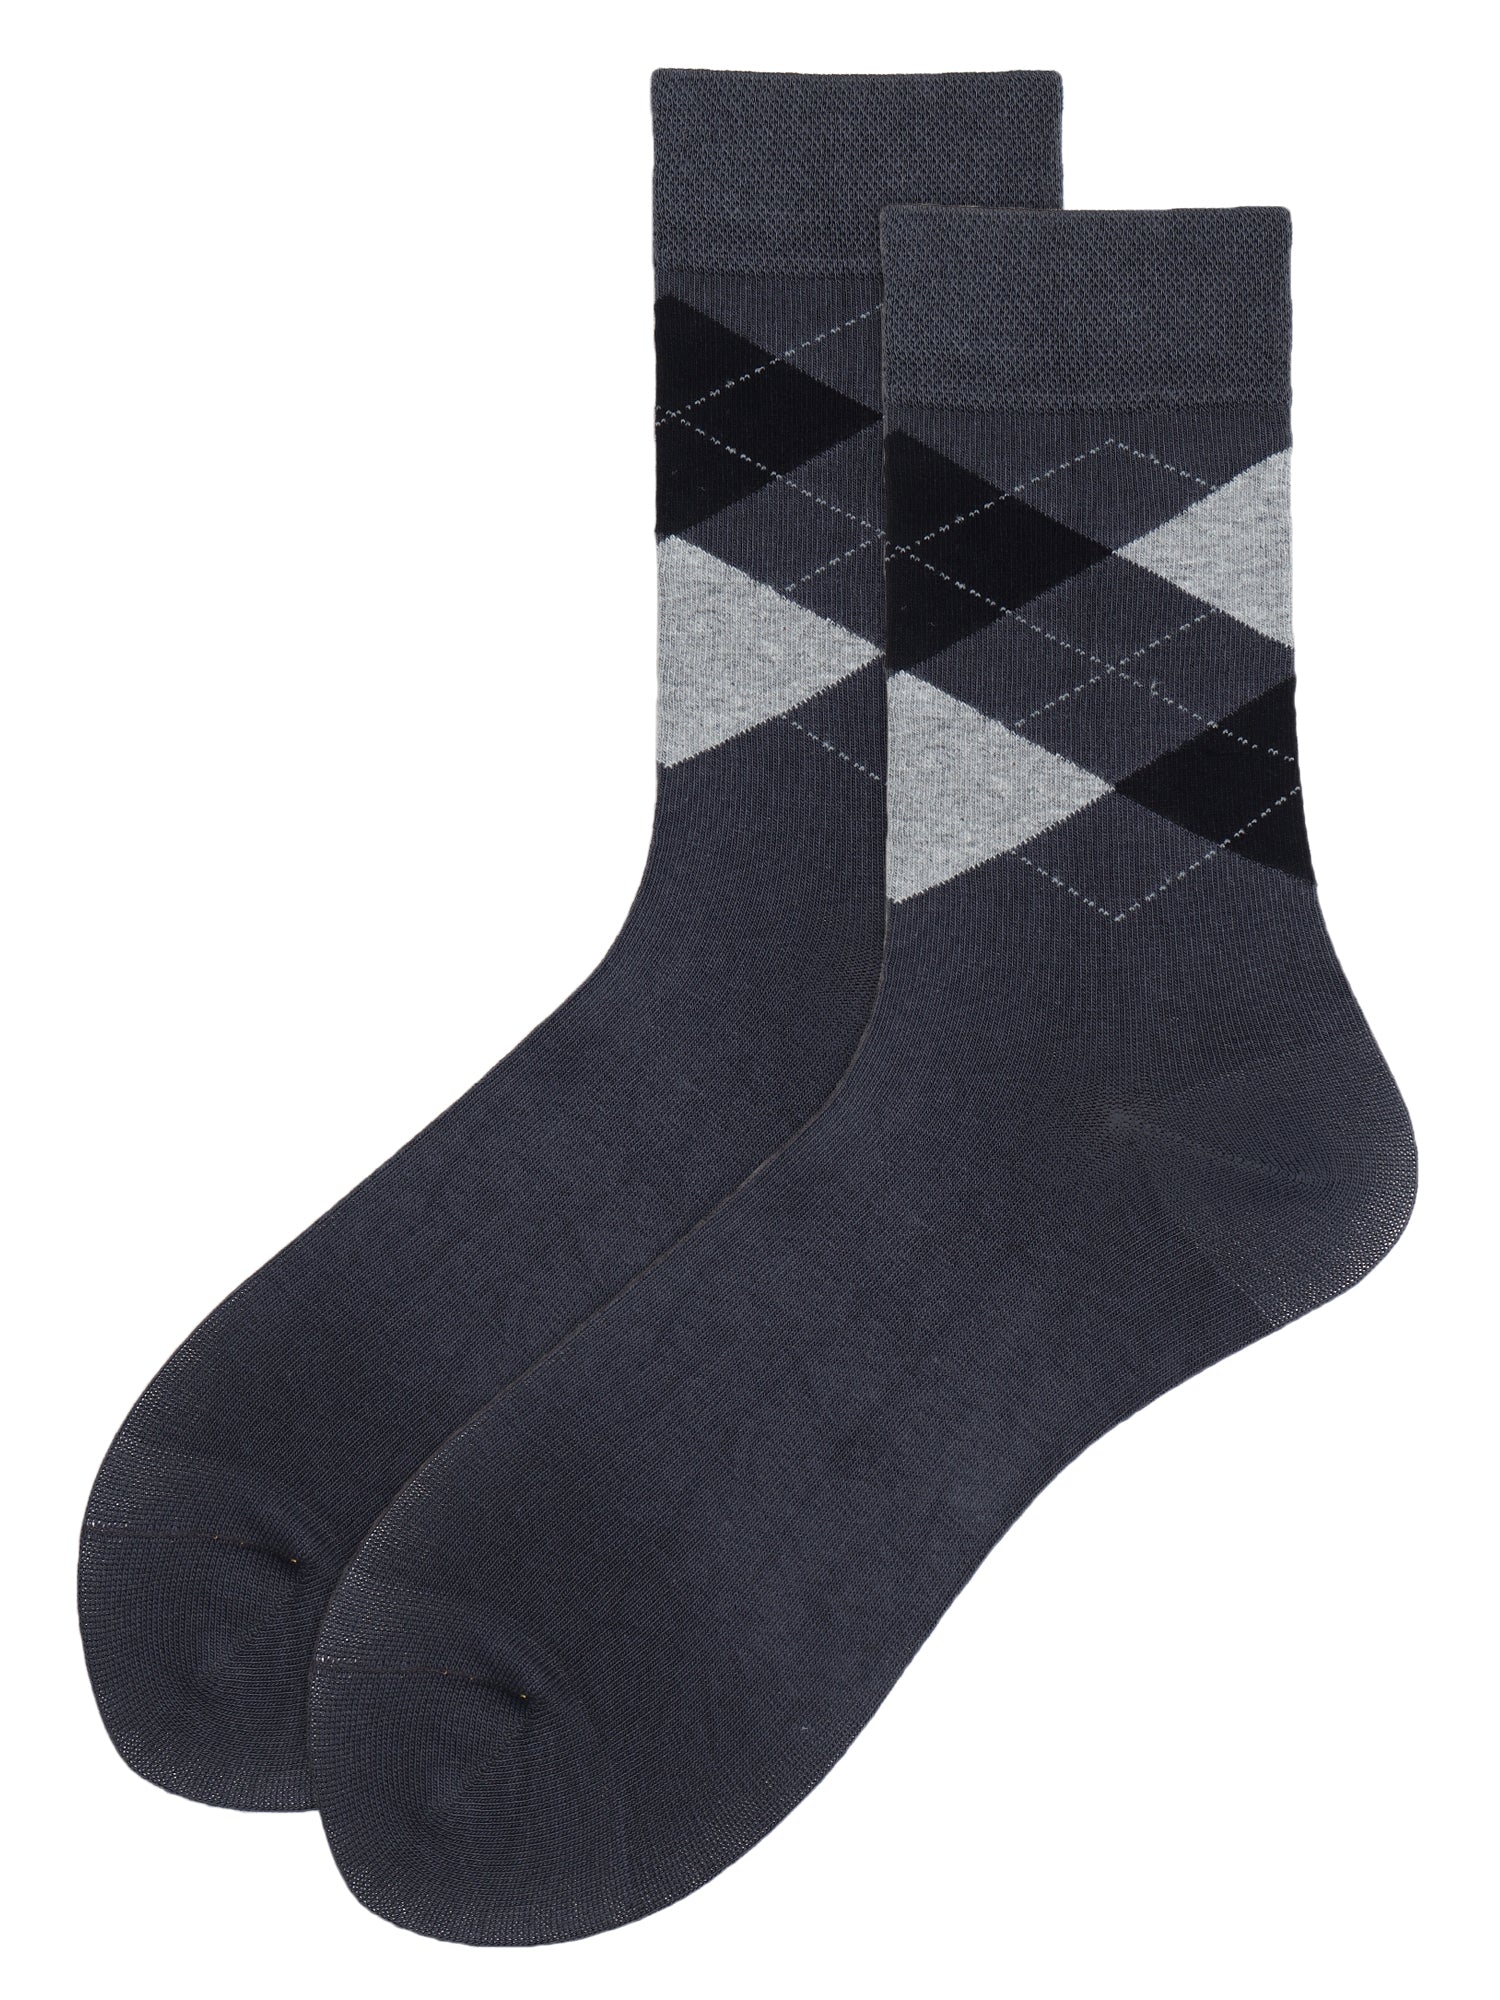 Classic Argyle Grey Socks